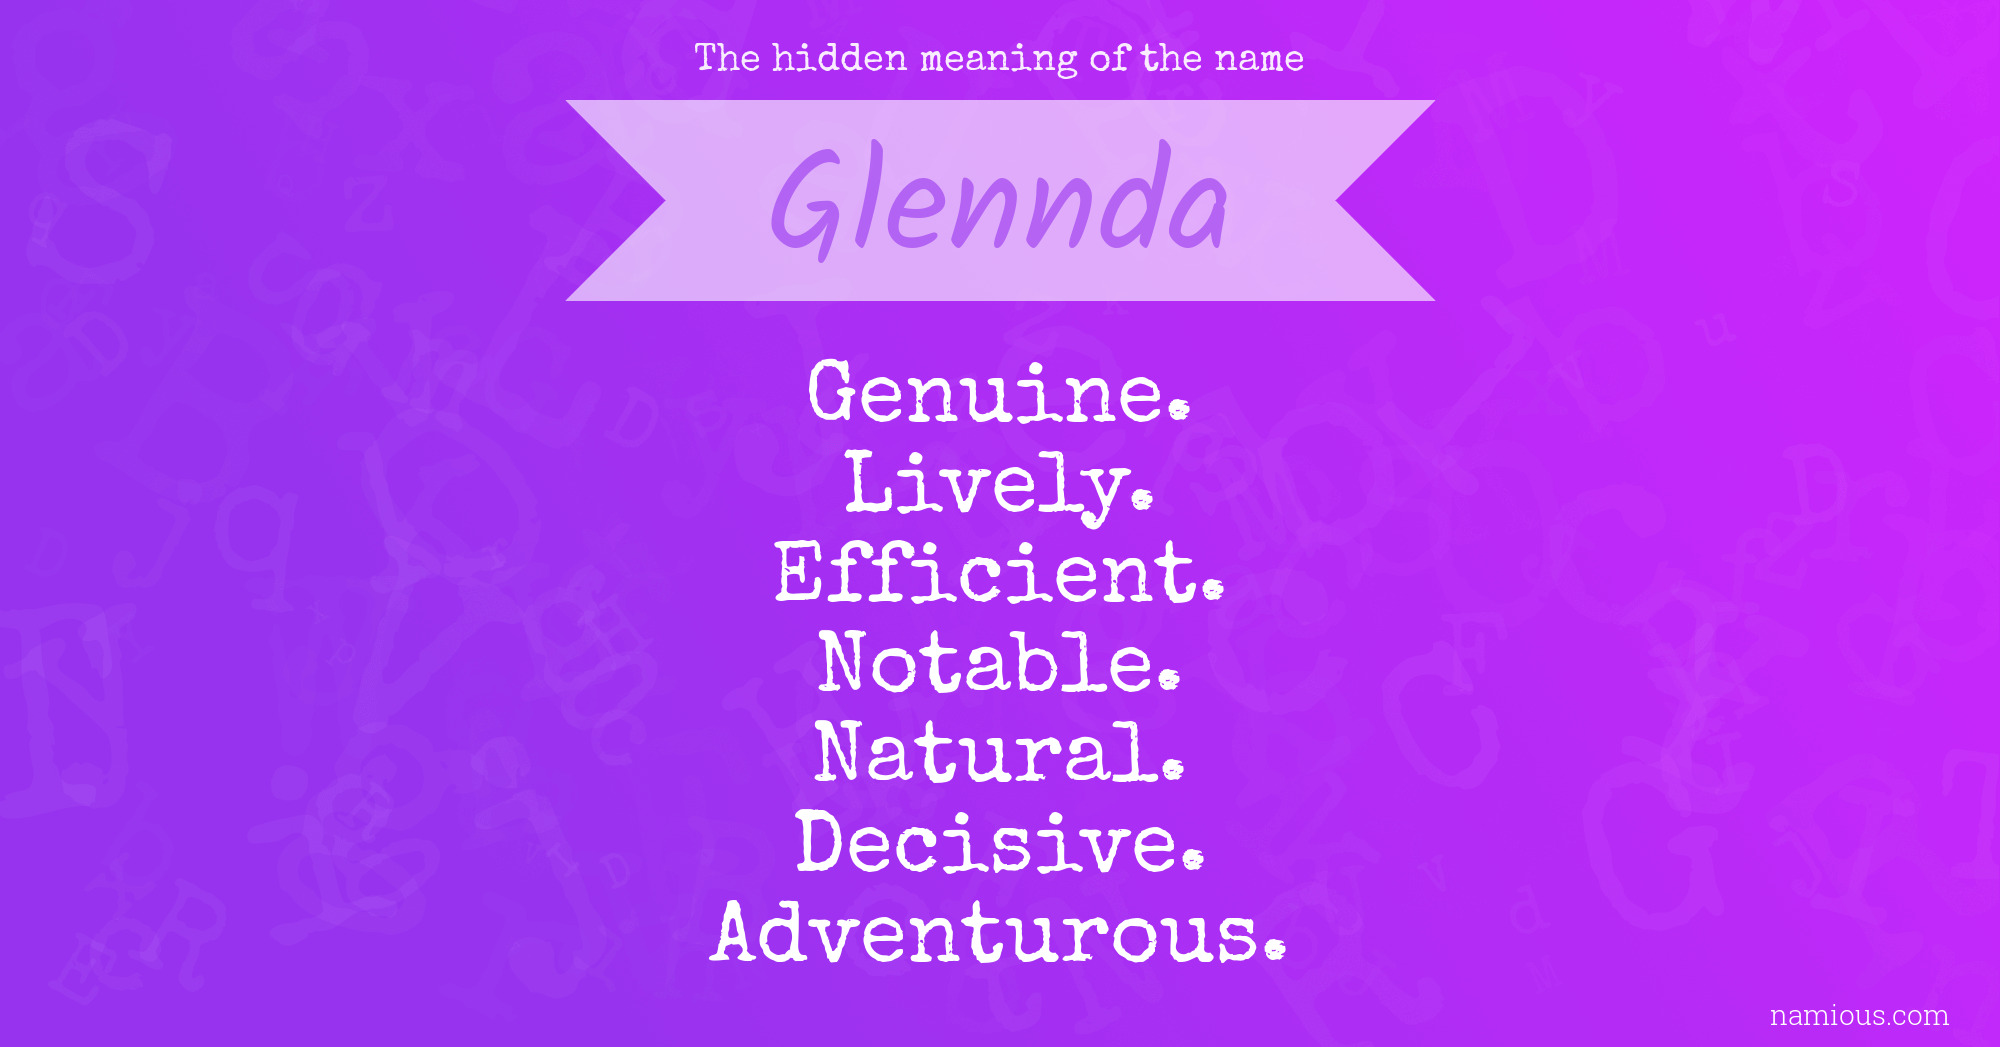 The hidden meaning of the name Glennda